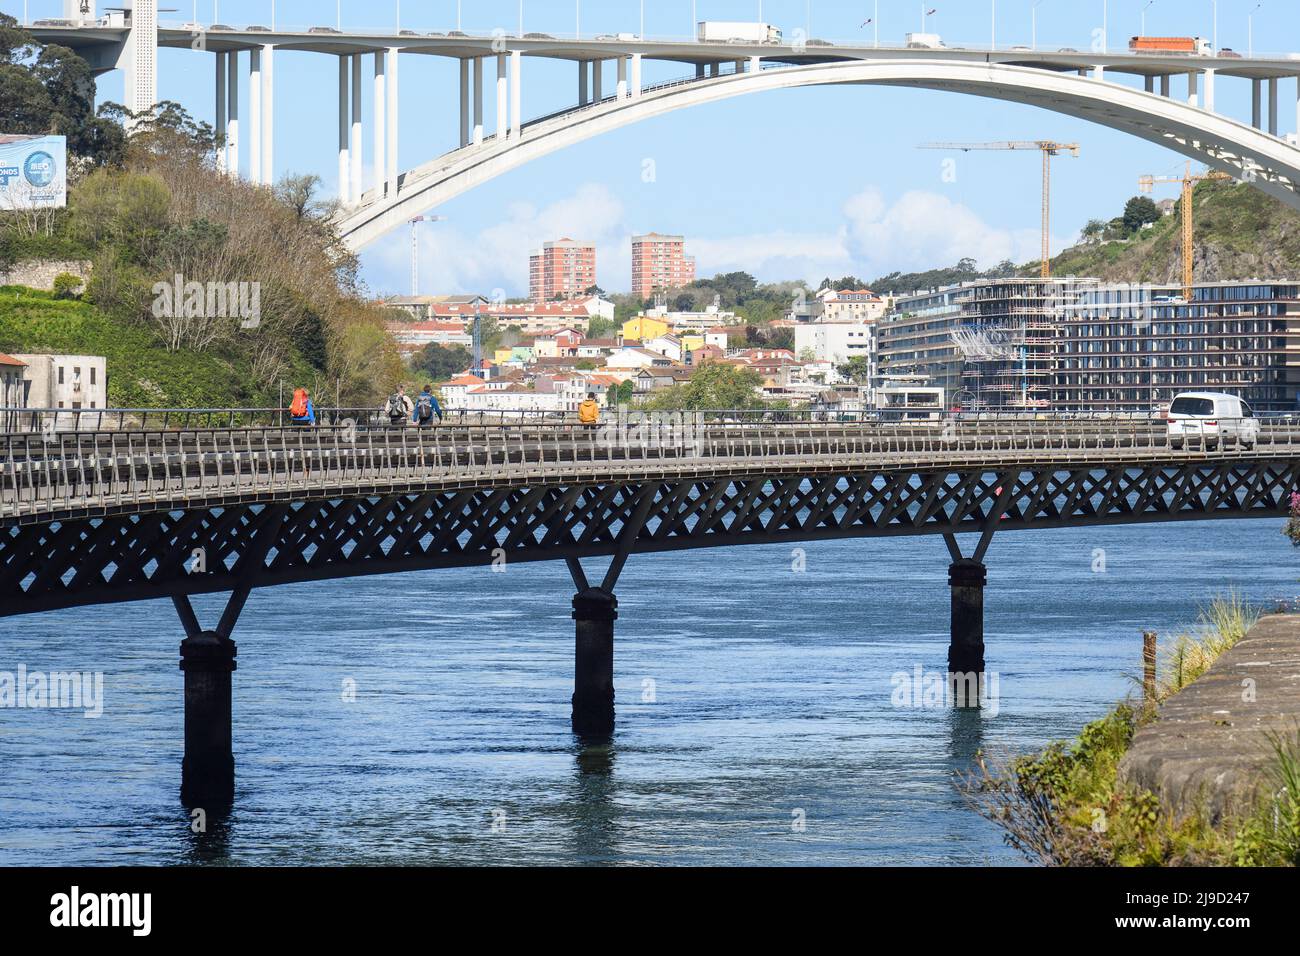 Cais das Pedras Viaduct over the Douro River in Porto, with the Arrabida Bridge in the background. Stock Photo